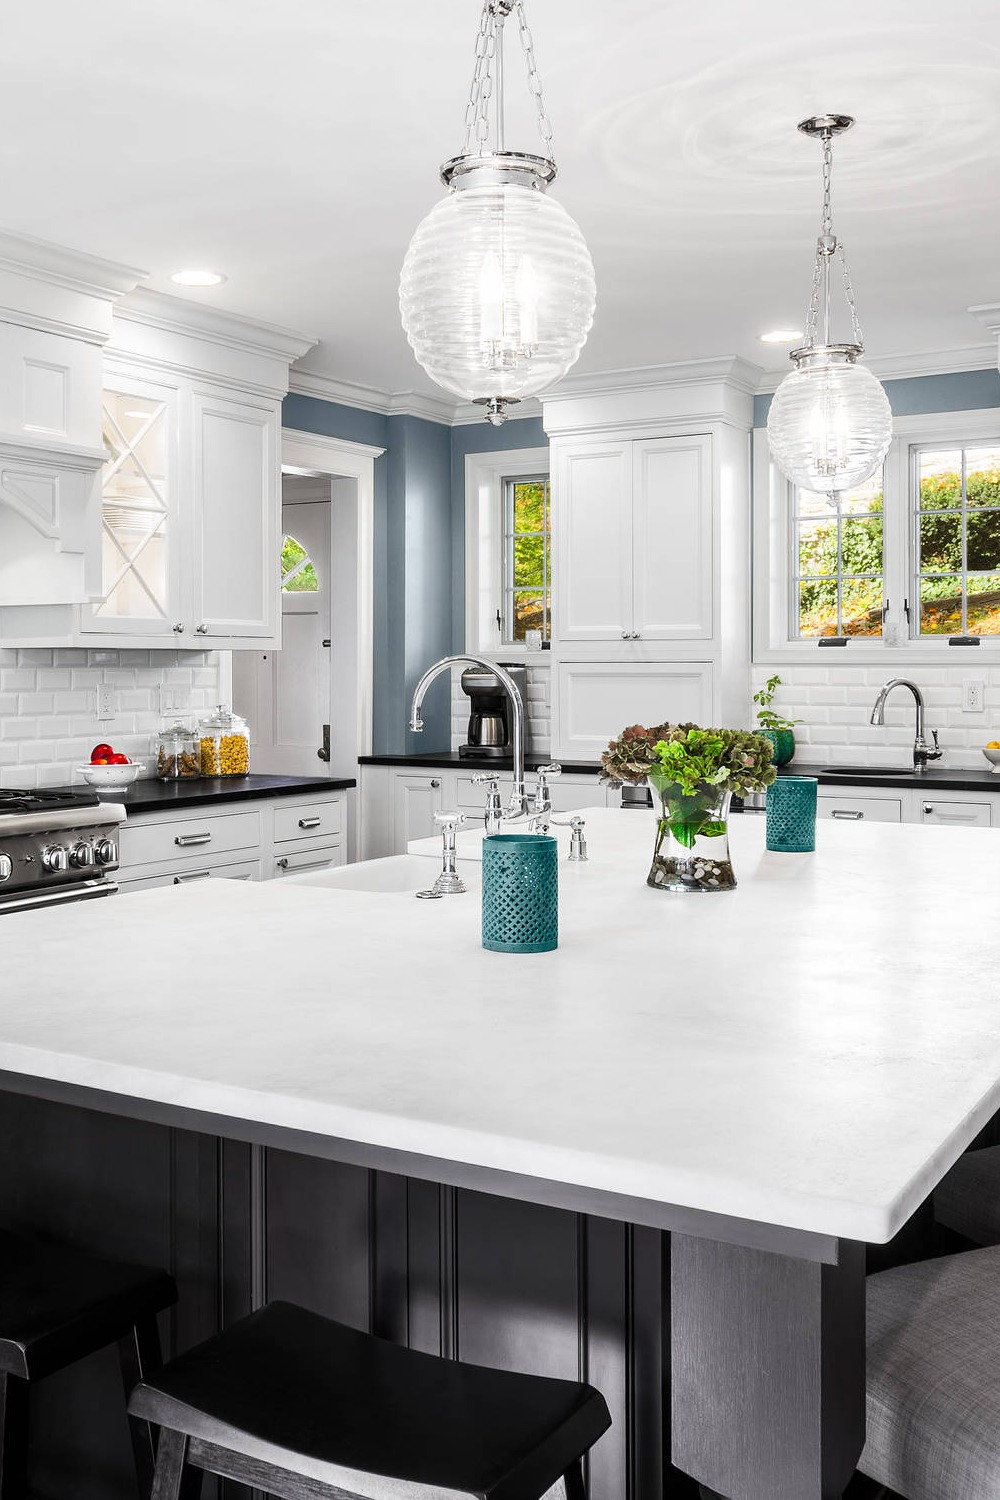 Soapstone Countertops Subway Backsplash White Cabinetry Gray Paint Pendant Lightings Eat In Kitchen Open Concept